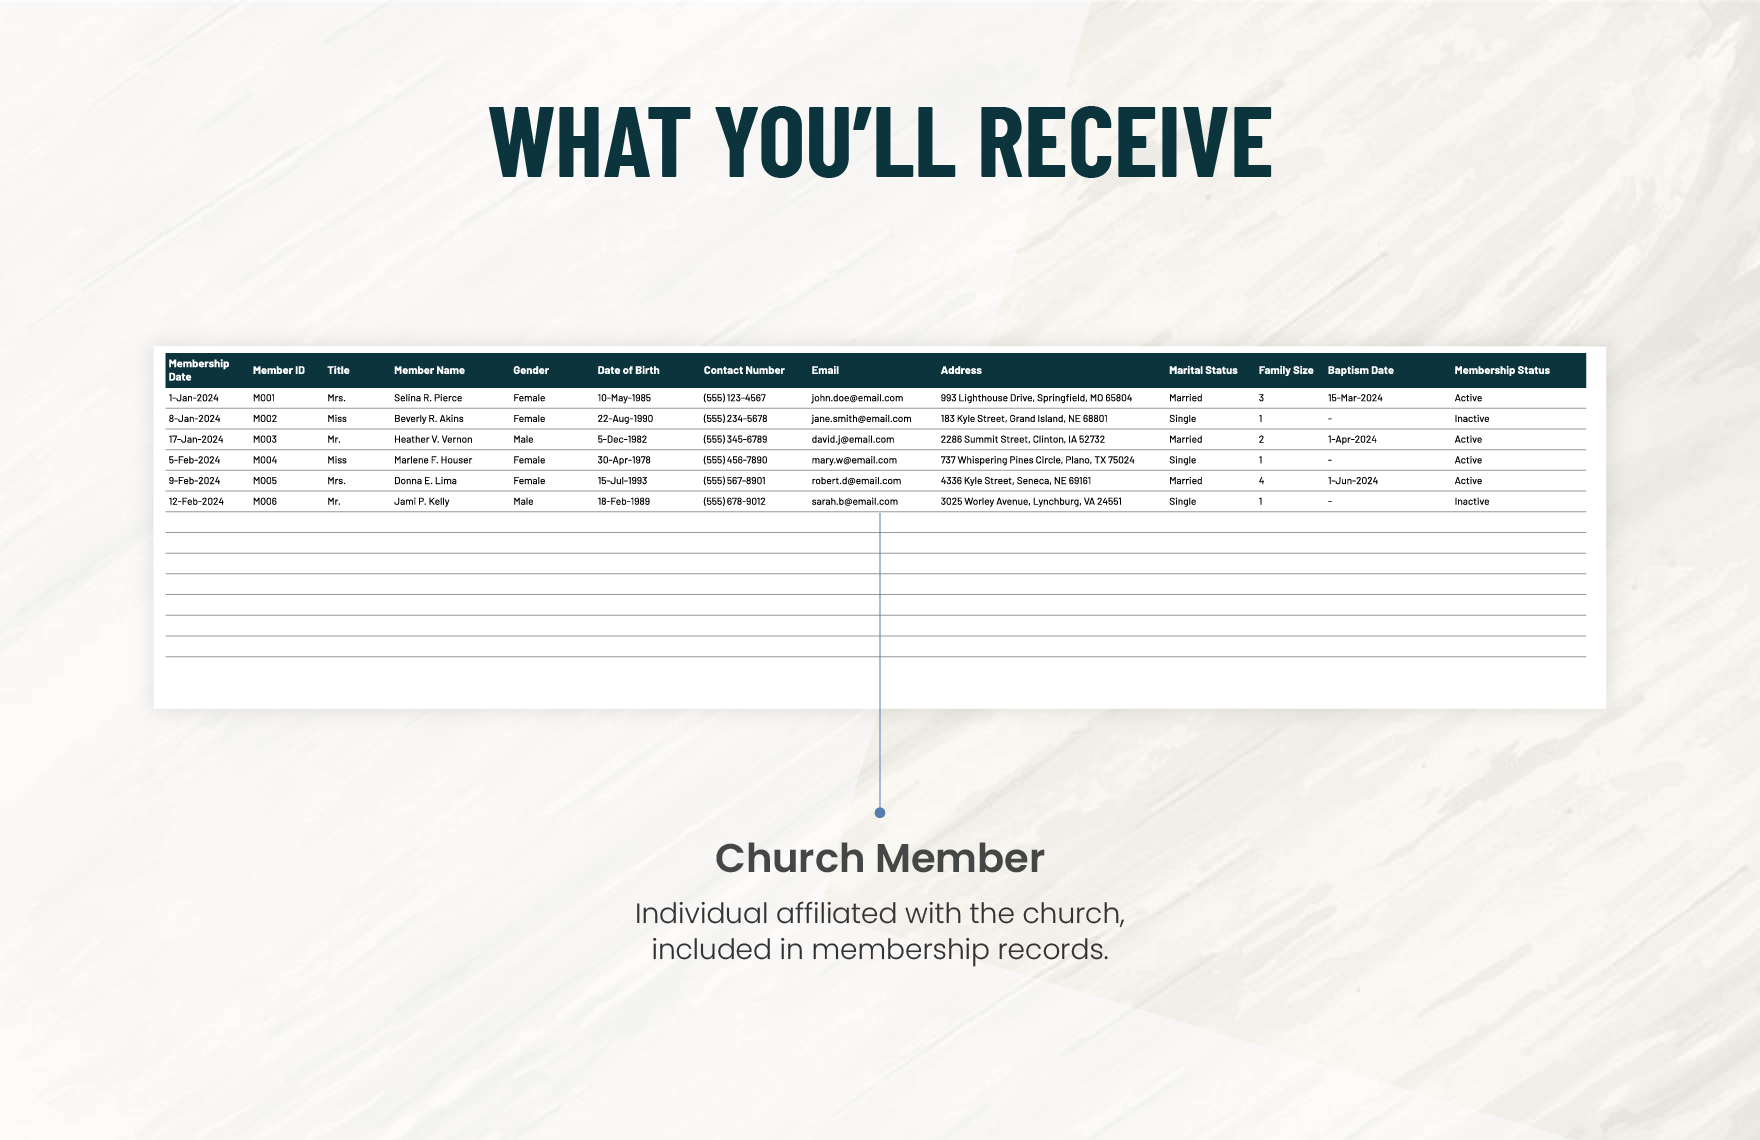 Church Membership Tracker Template